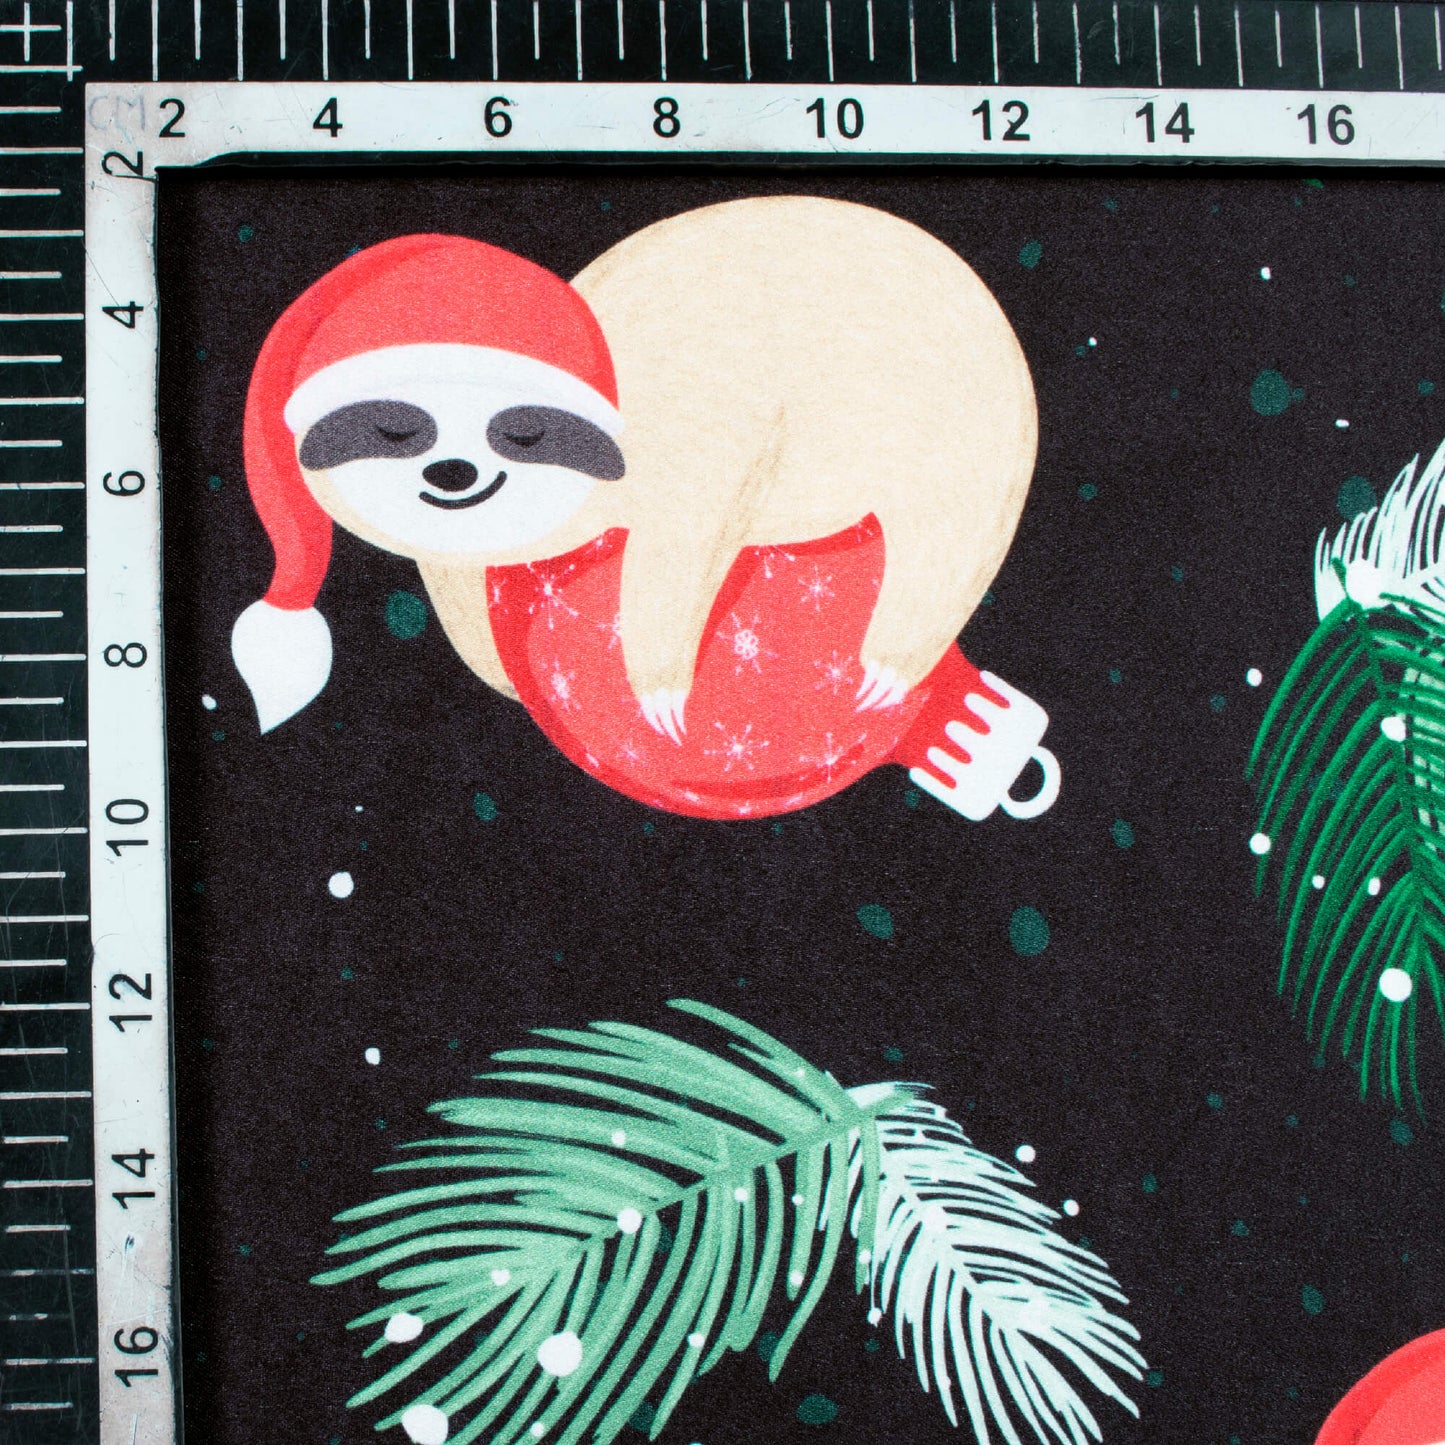 Black And Beige Christmas Pattern Digital Print Japan Satin Fabric - Fabcurate